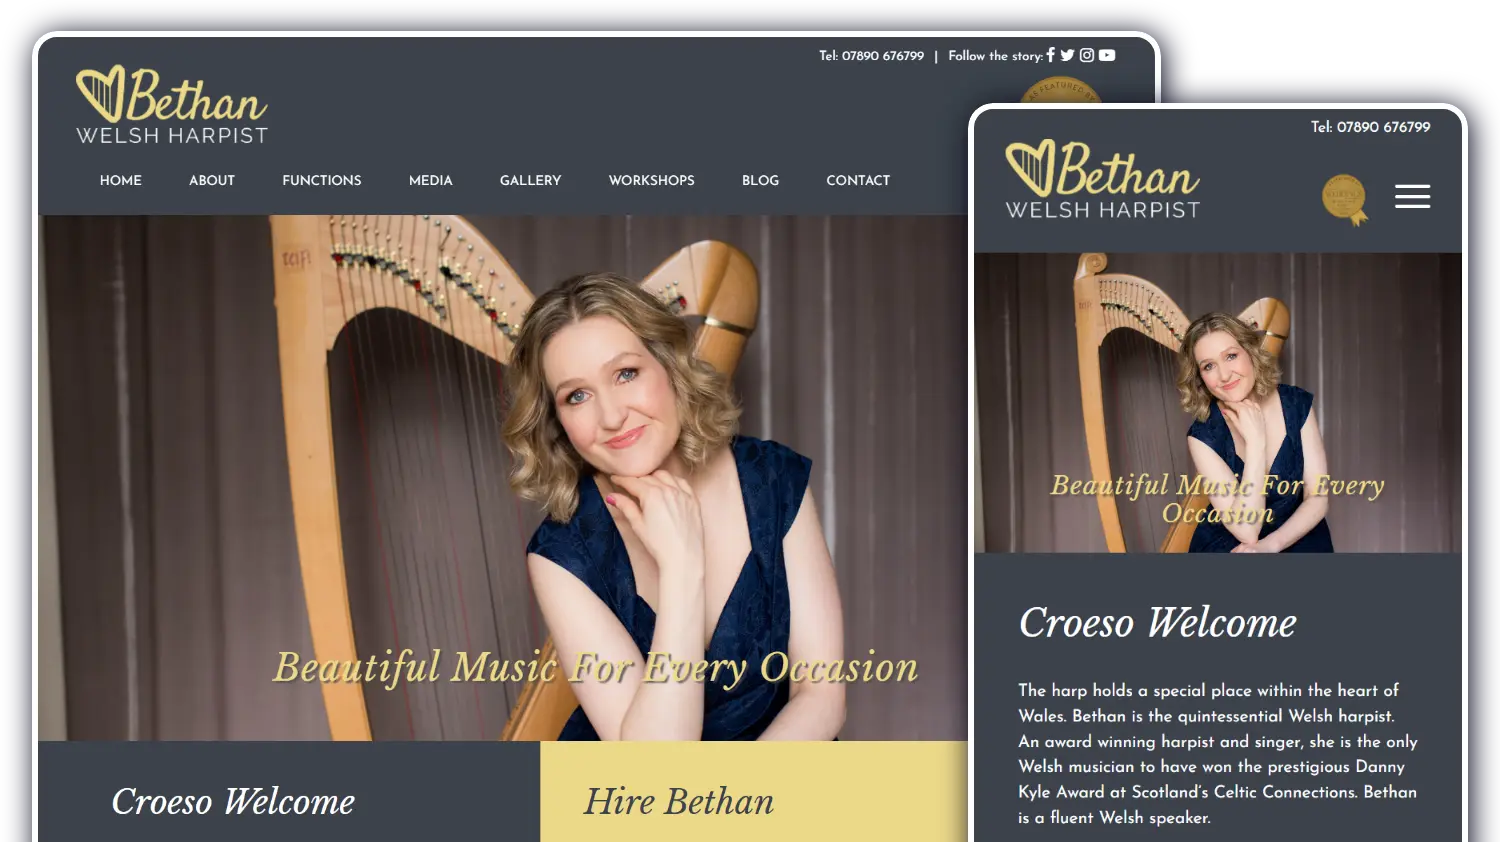 Bethan Welsh Harpist - Website by Blaze Concepts